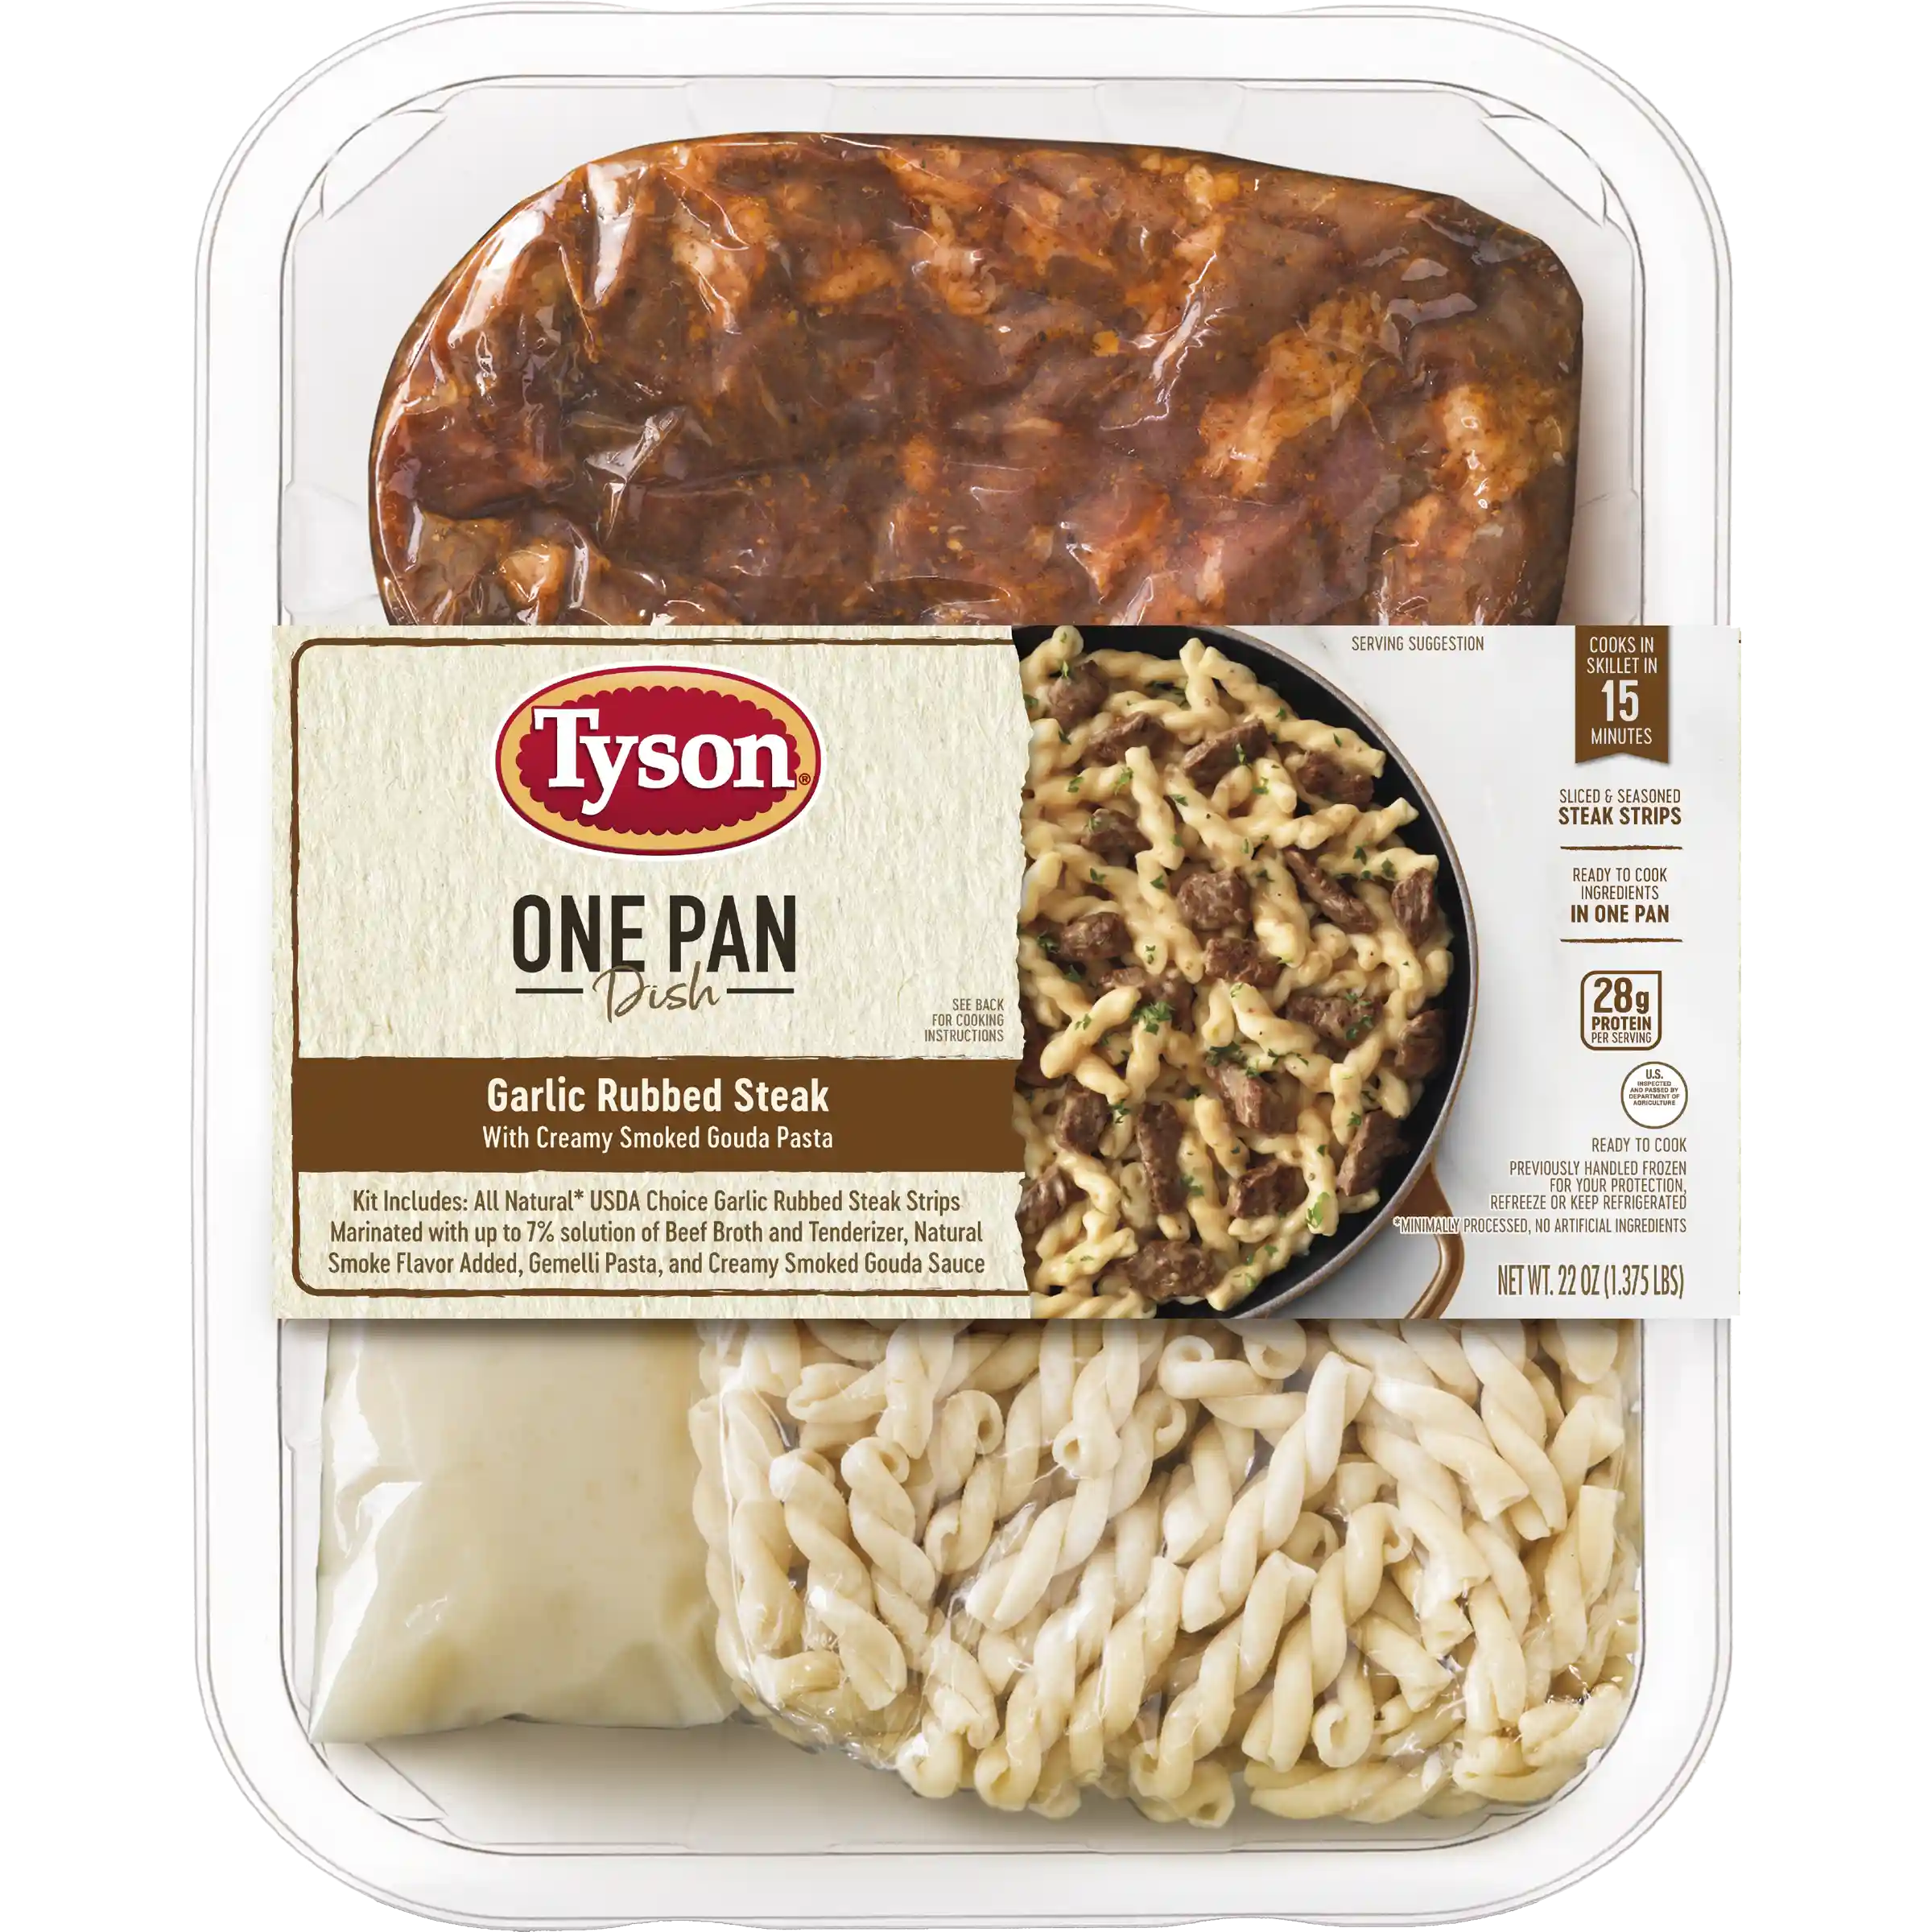 Tyson® One Pan Dish Garlic Rubbed Steak* with Creamy Smoked Gouda Pasta Meal Kit - 4 pkg per case